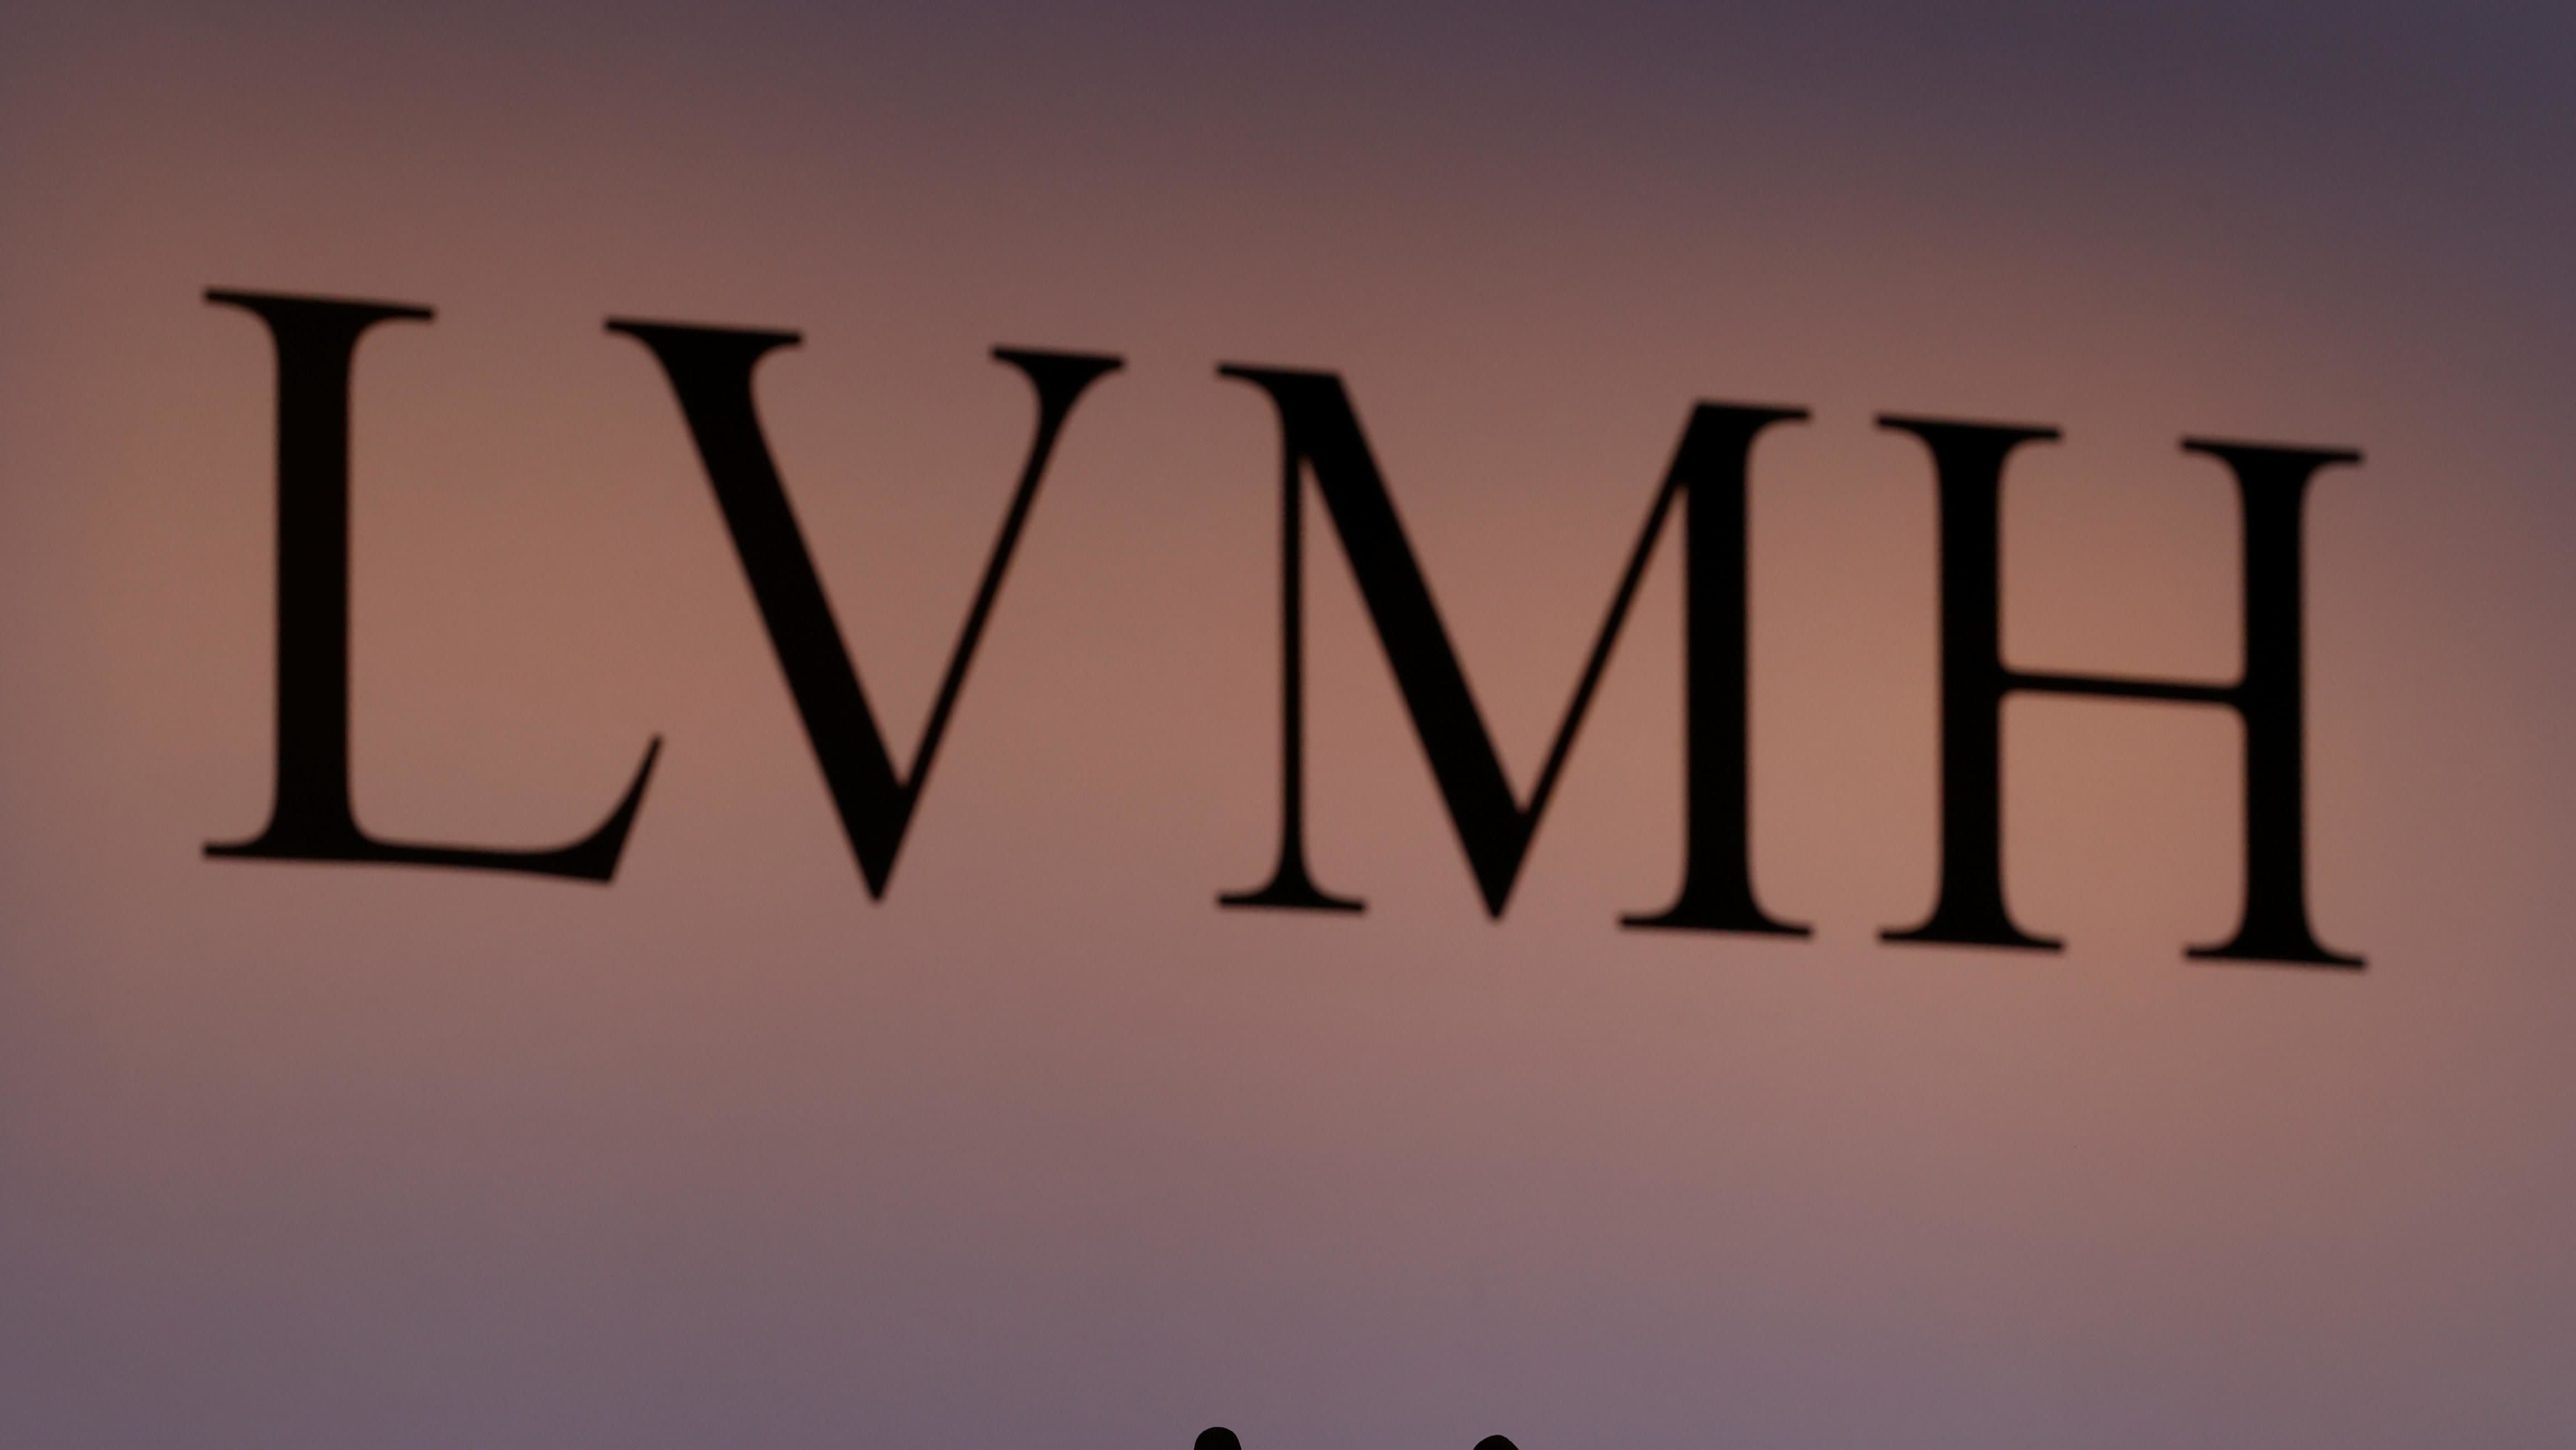 lvmh logo no background